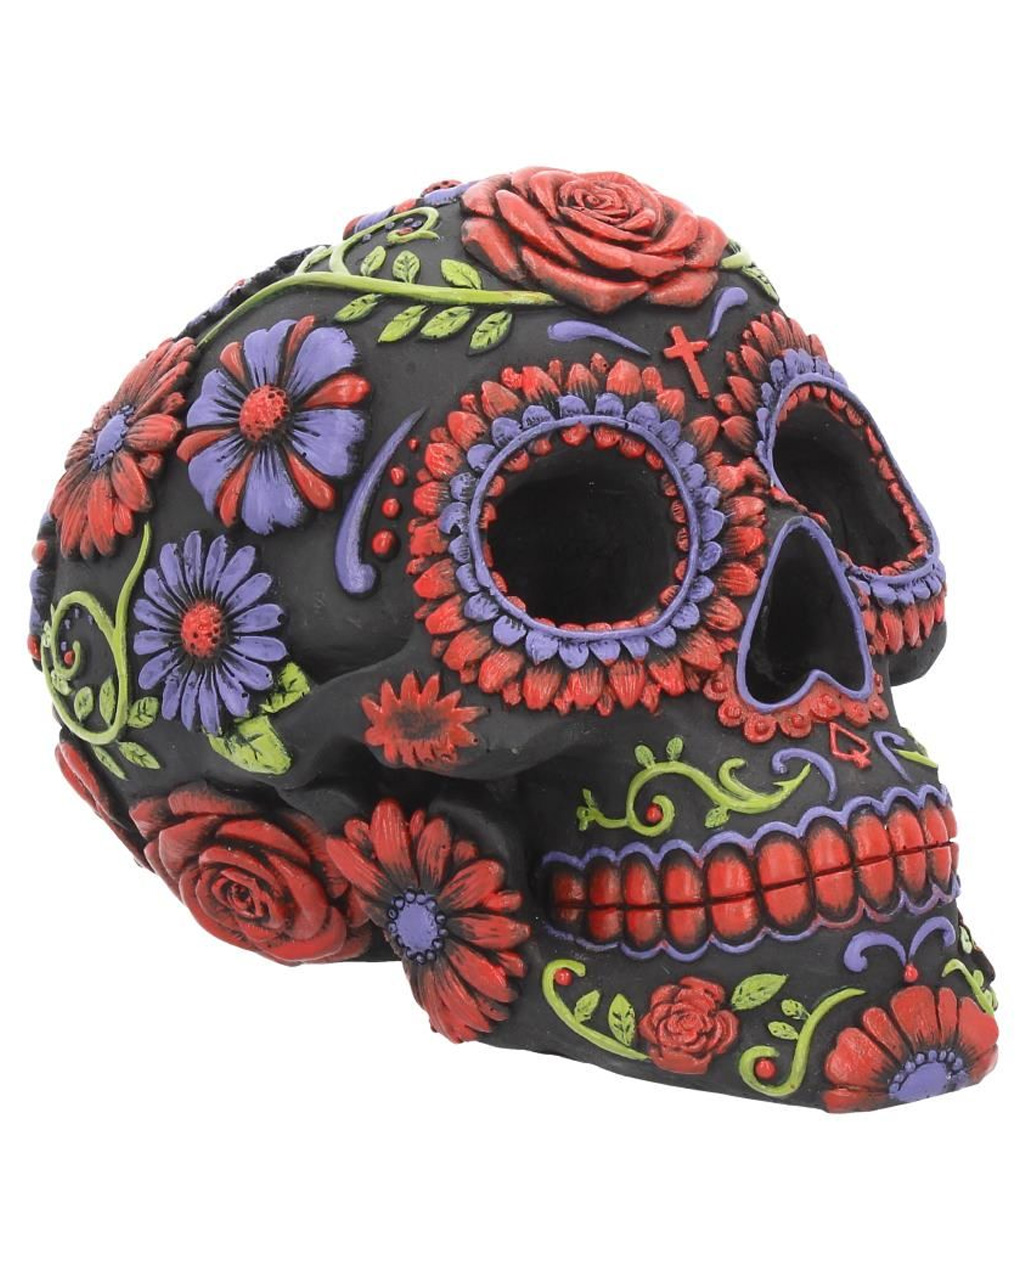 Sugar Skull mit Blüten Ornament kaufen